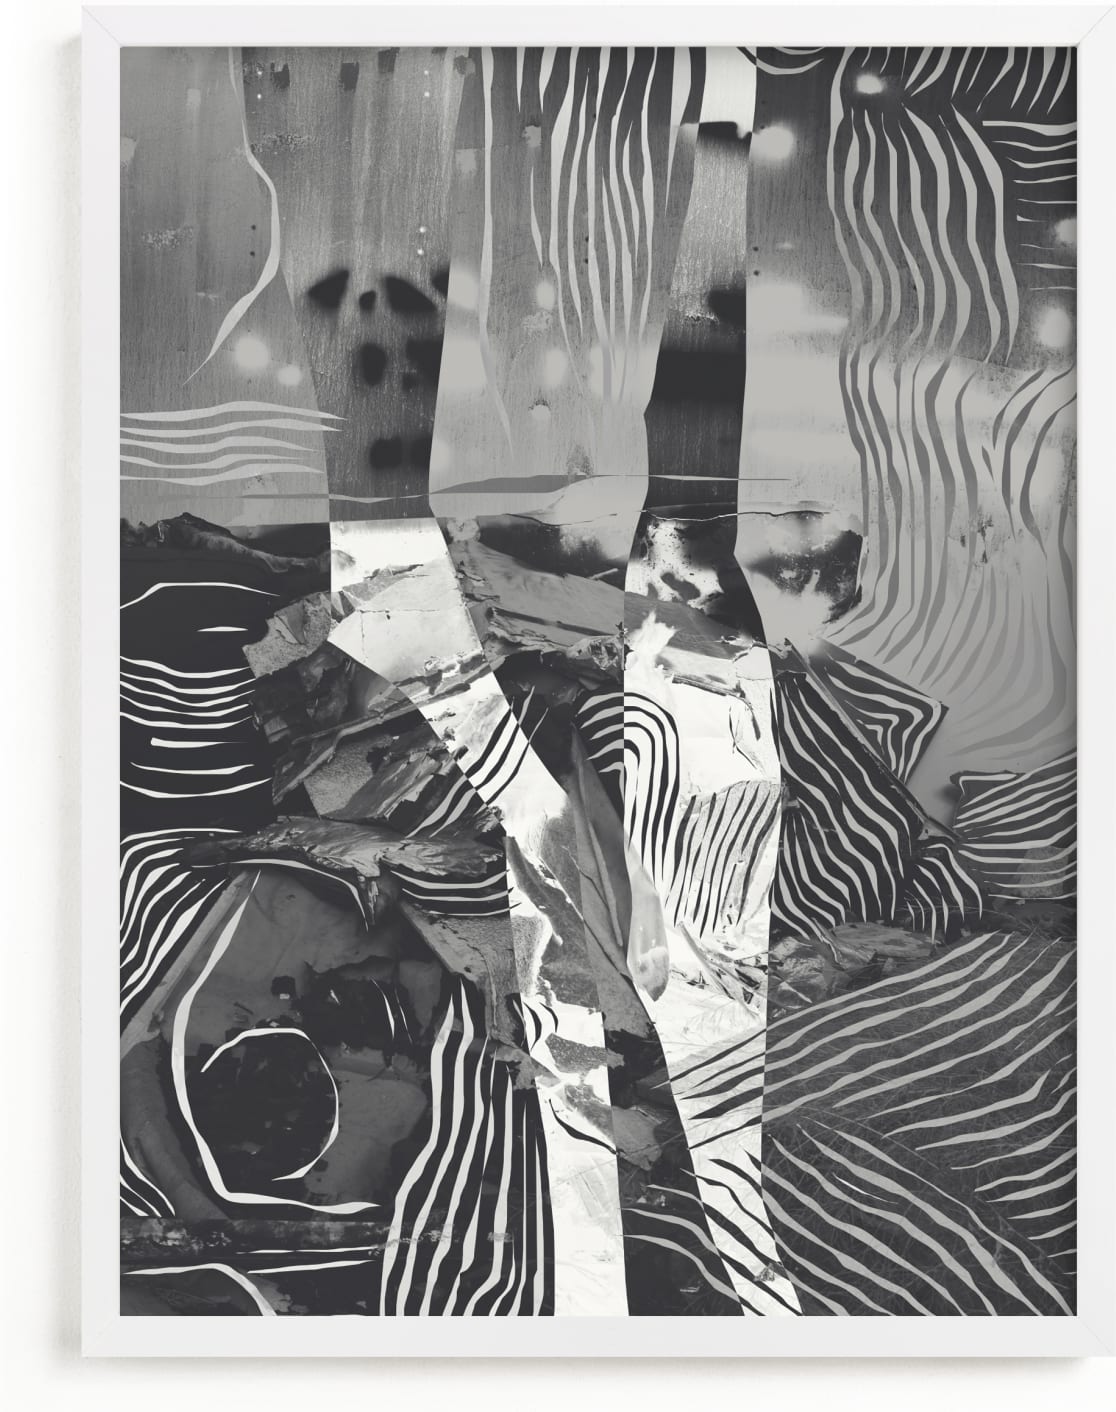 This is a black and white art by Hannah E Palmer called terrain.